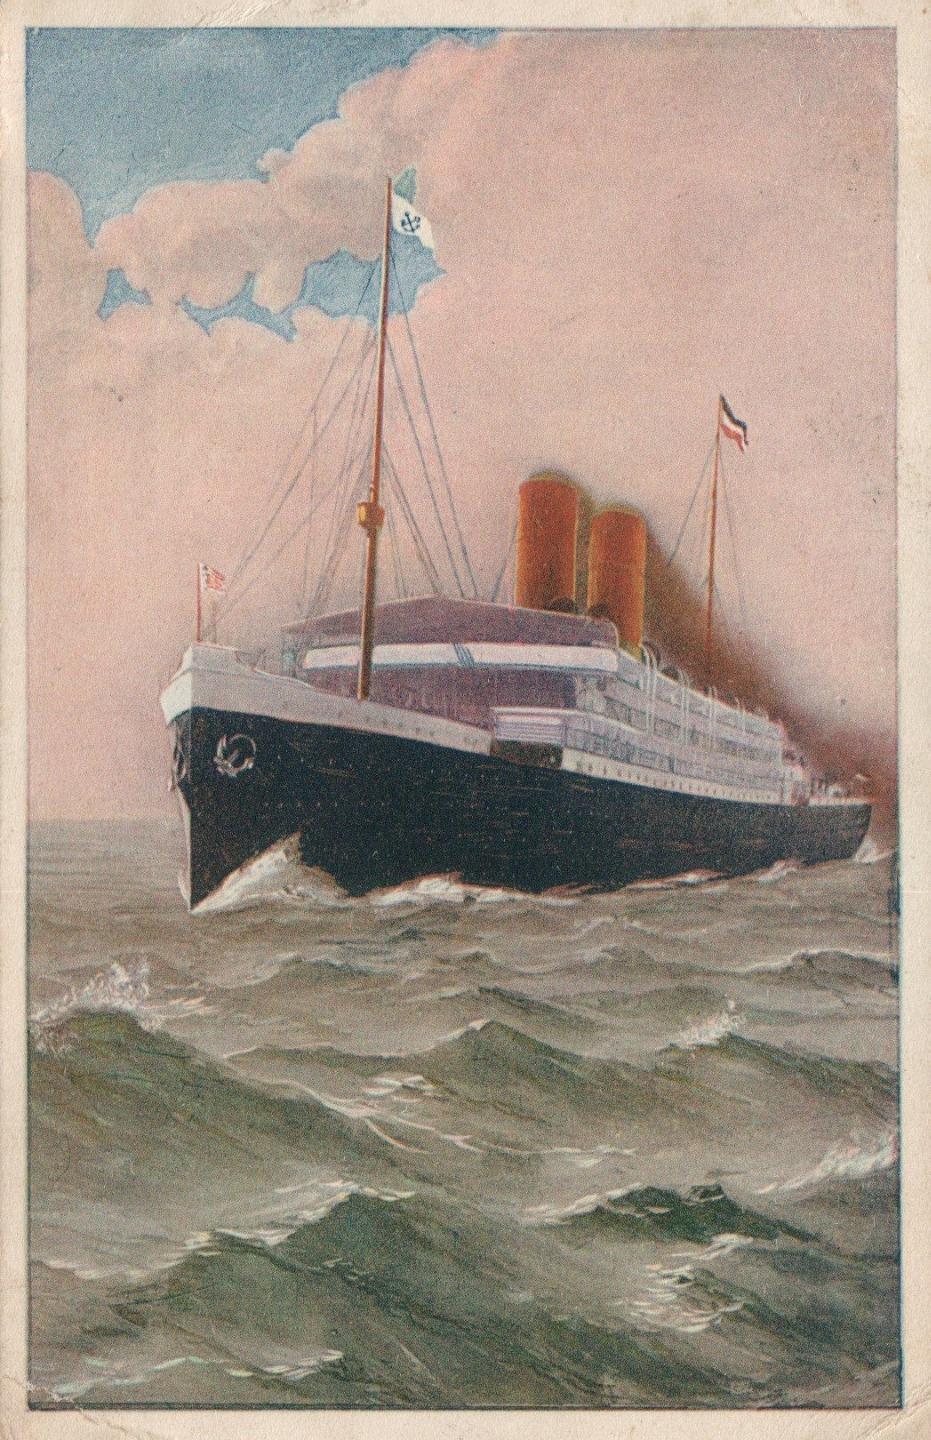 SCARCE 1913 VINTAGE Norddeutscher Lloyd Bremen SS PRINCESS ALICE POSTCARD